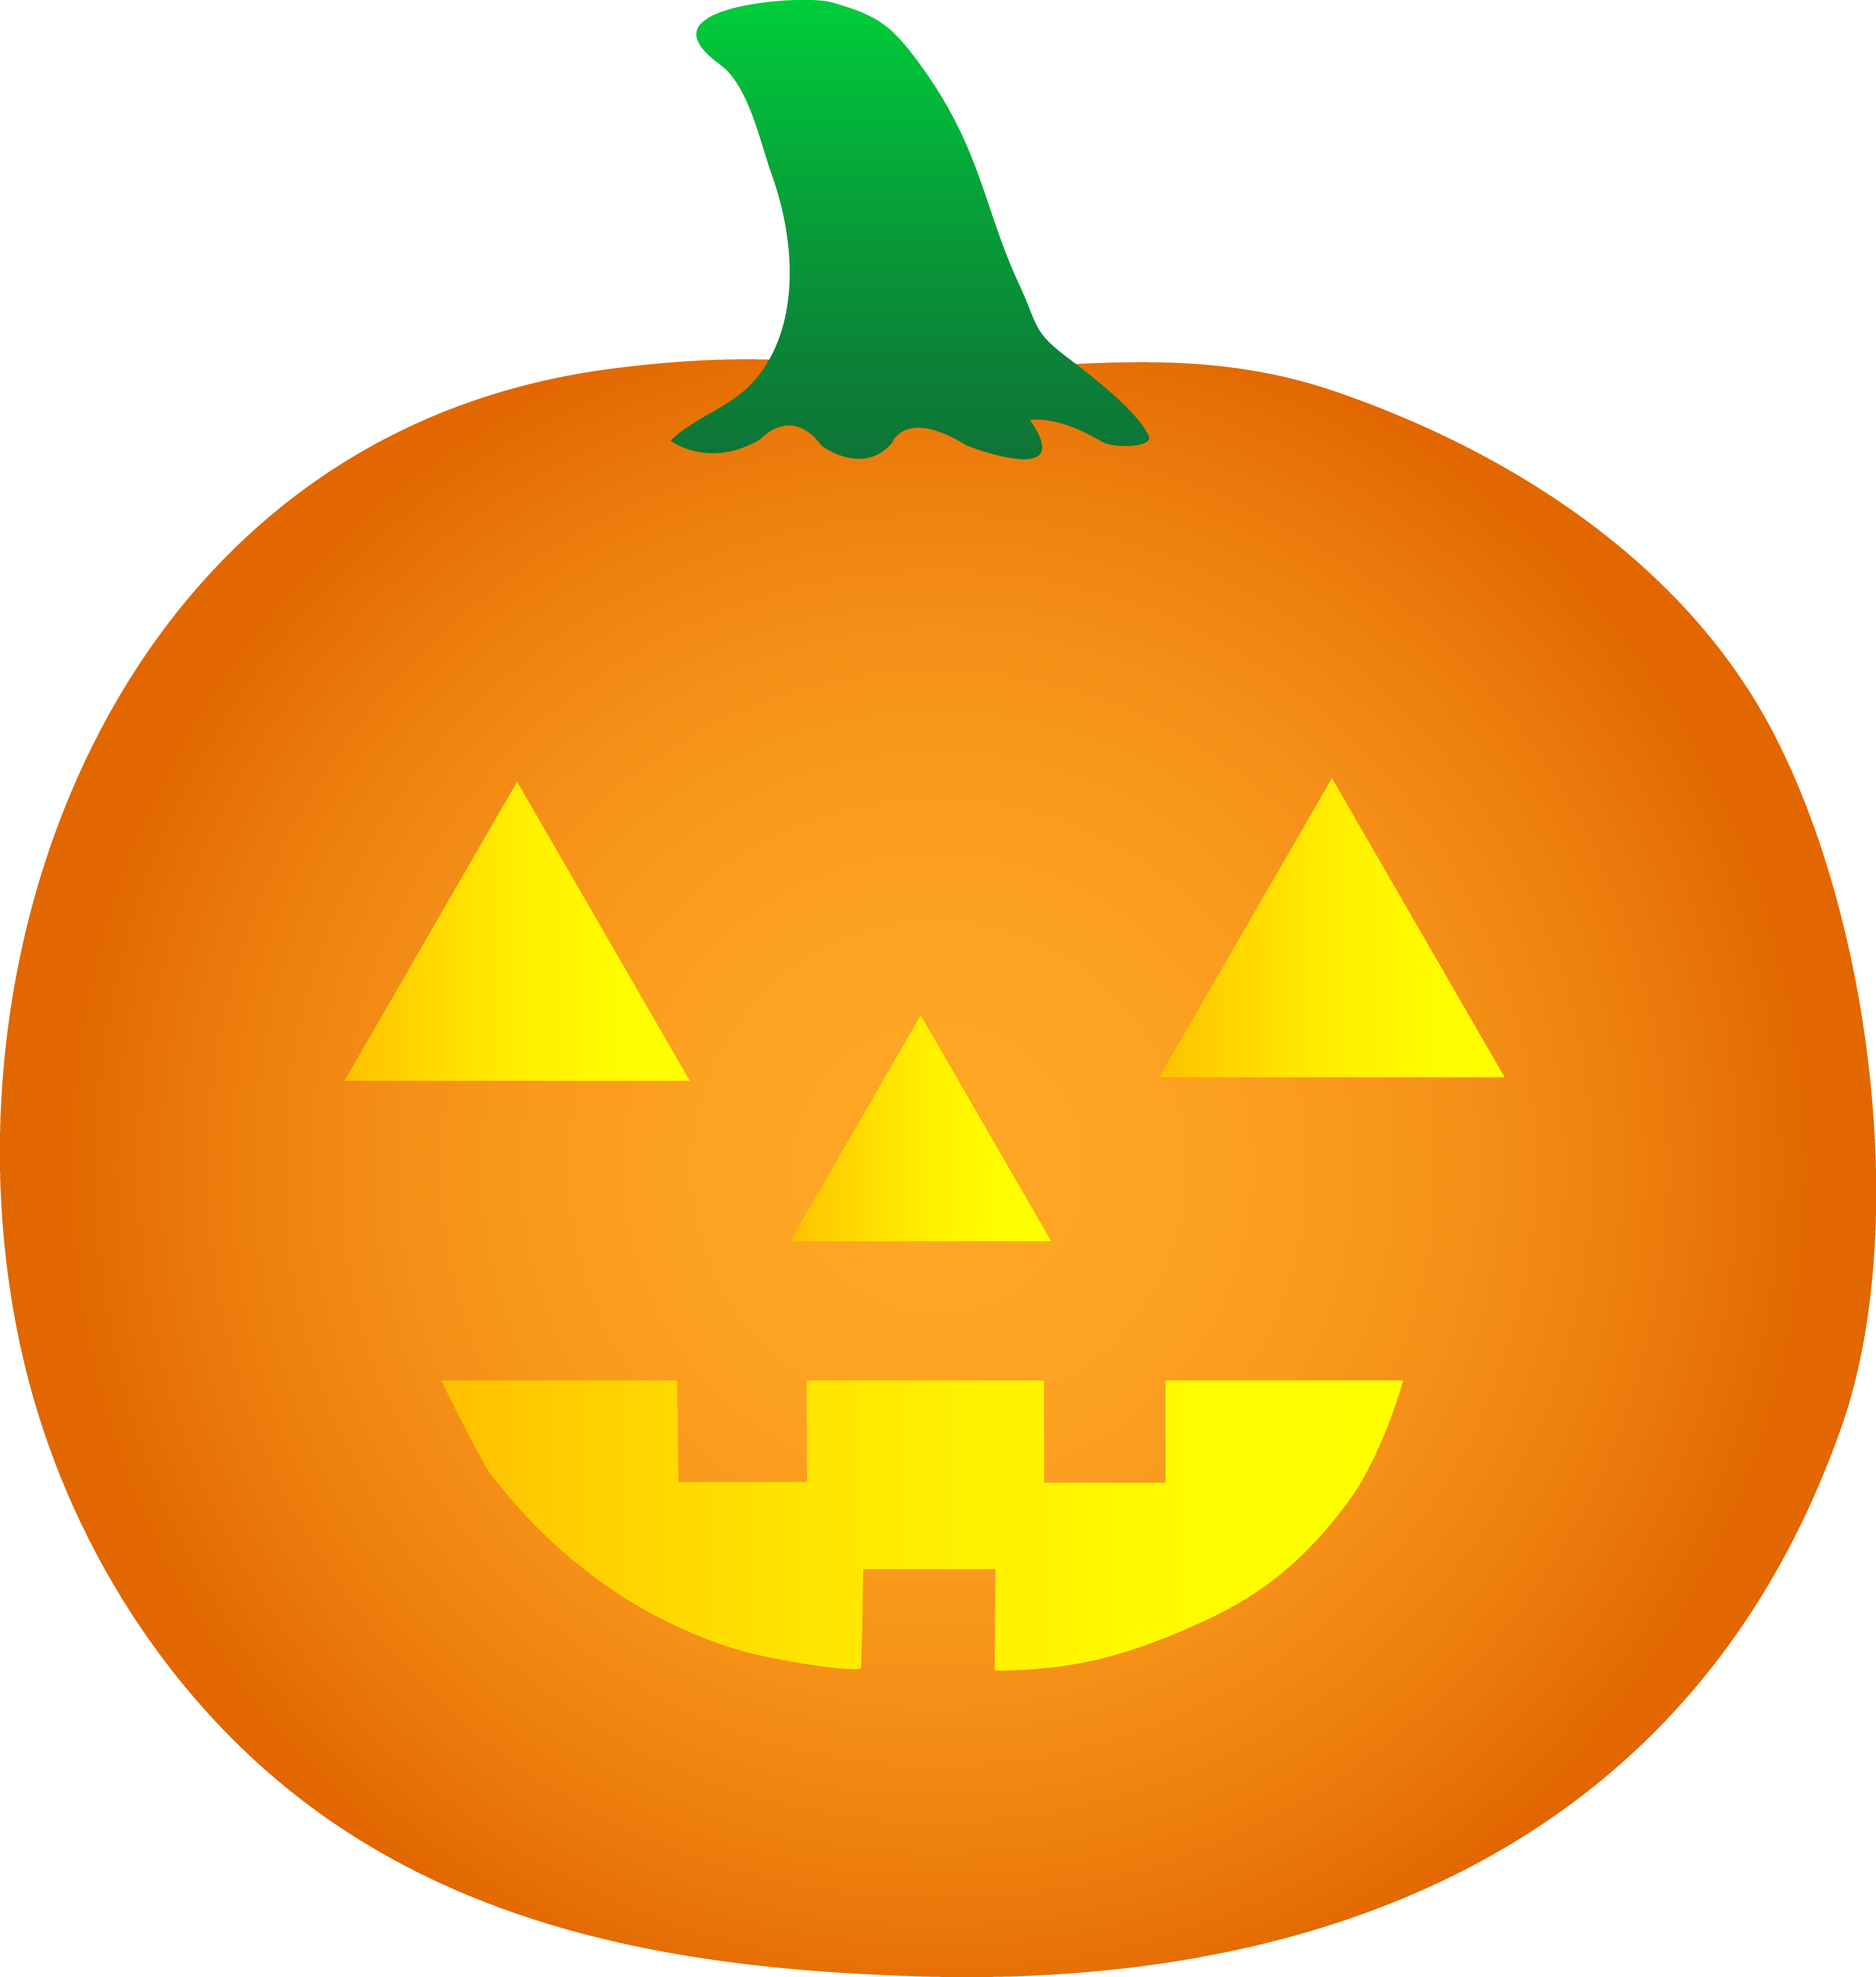 Halloween Pictures Of Pumpkins | Free Download Clip Art | Free ...